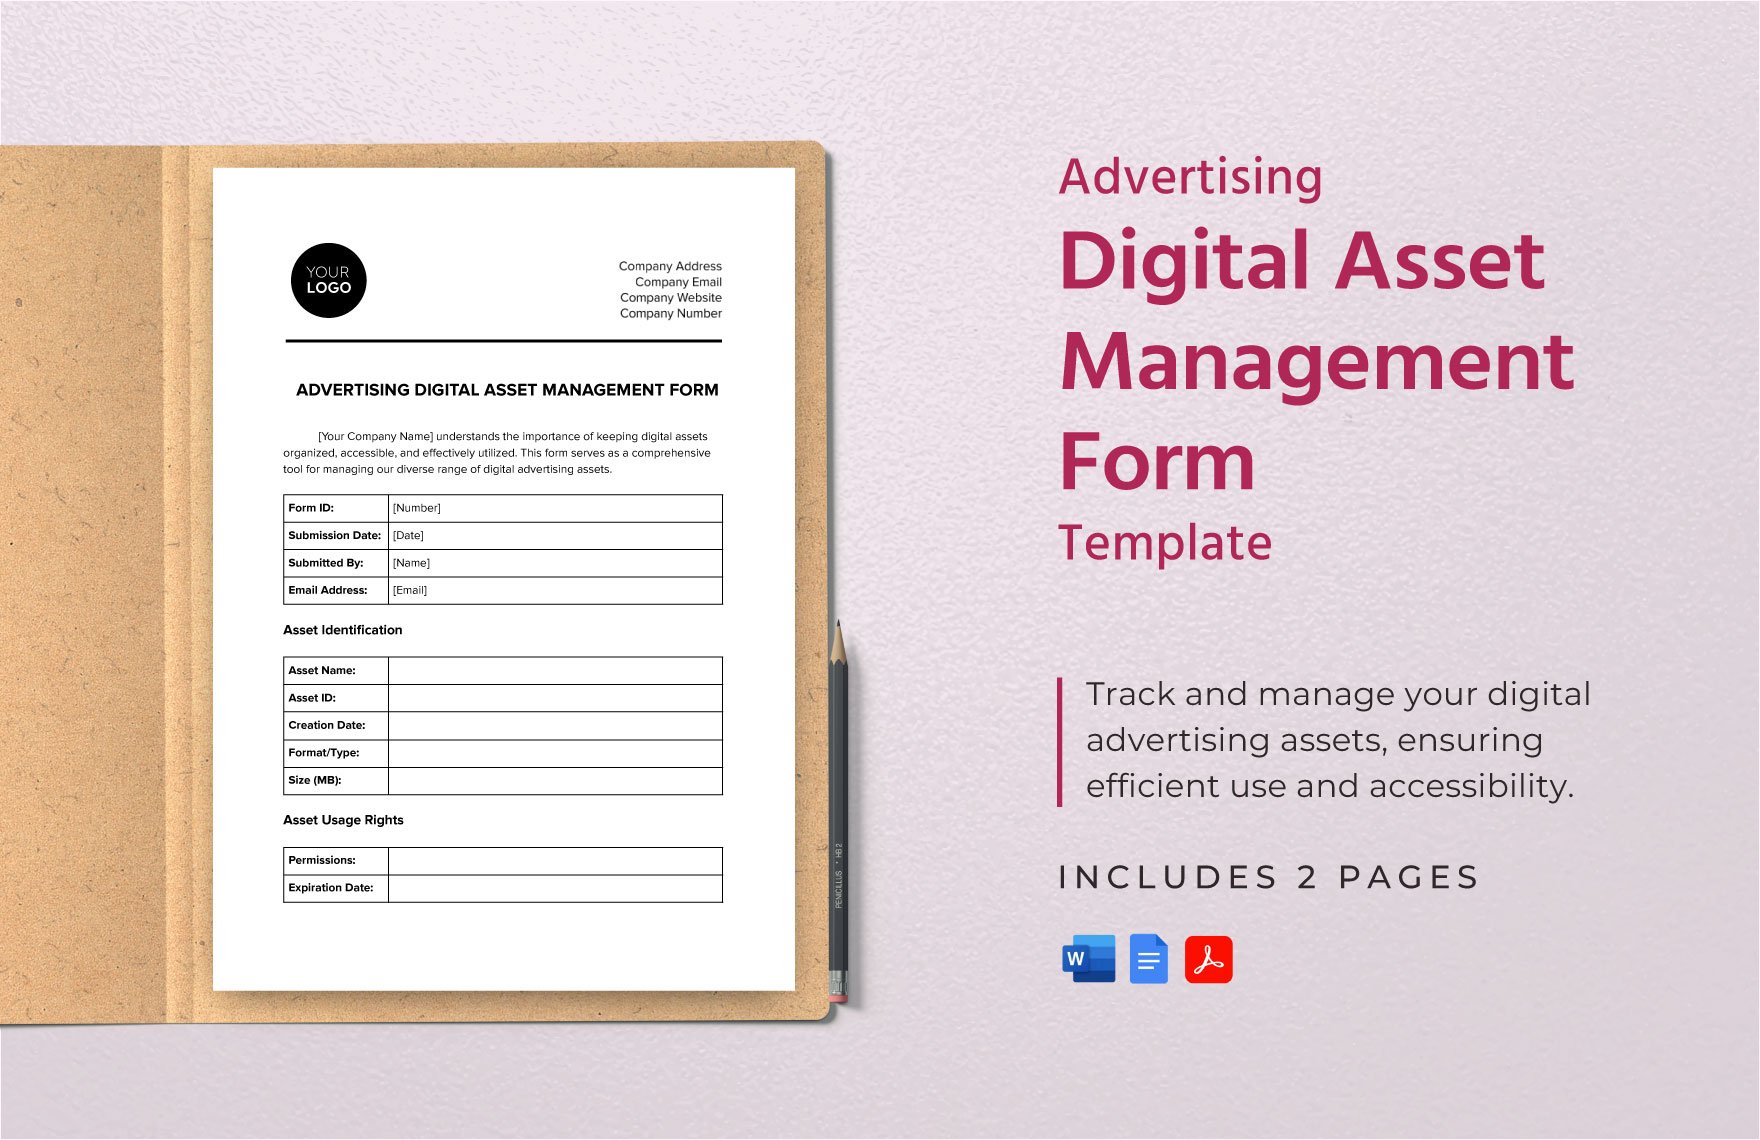 Advertising Digital Asset Management Form Template